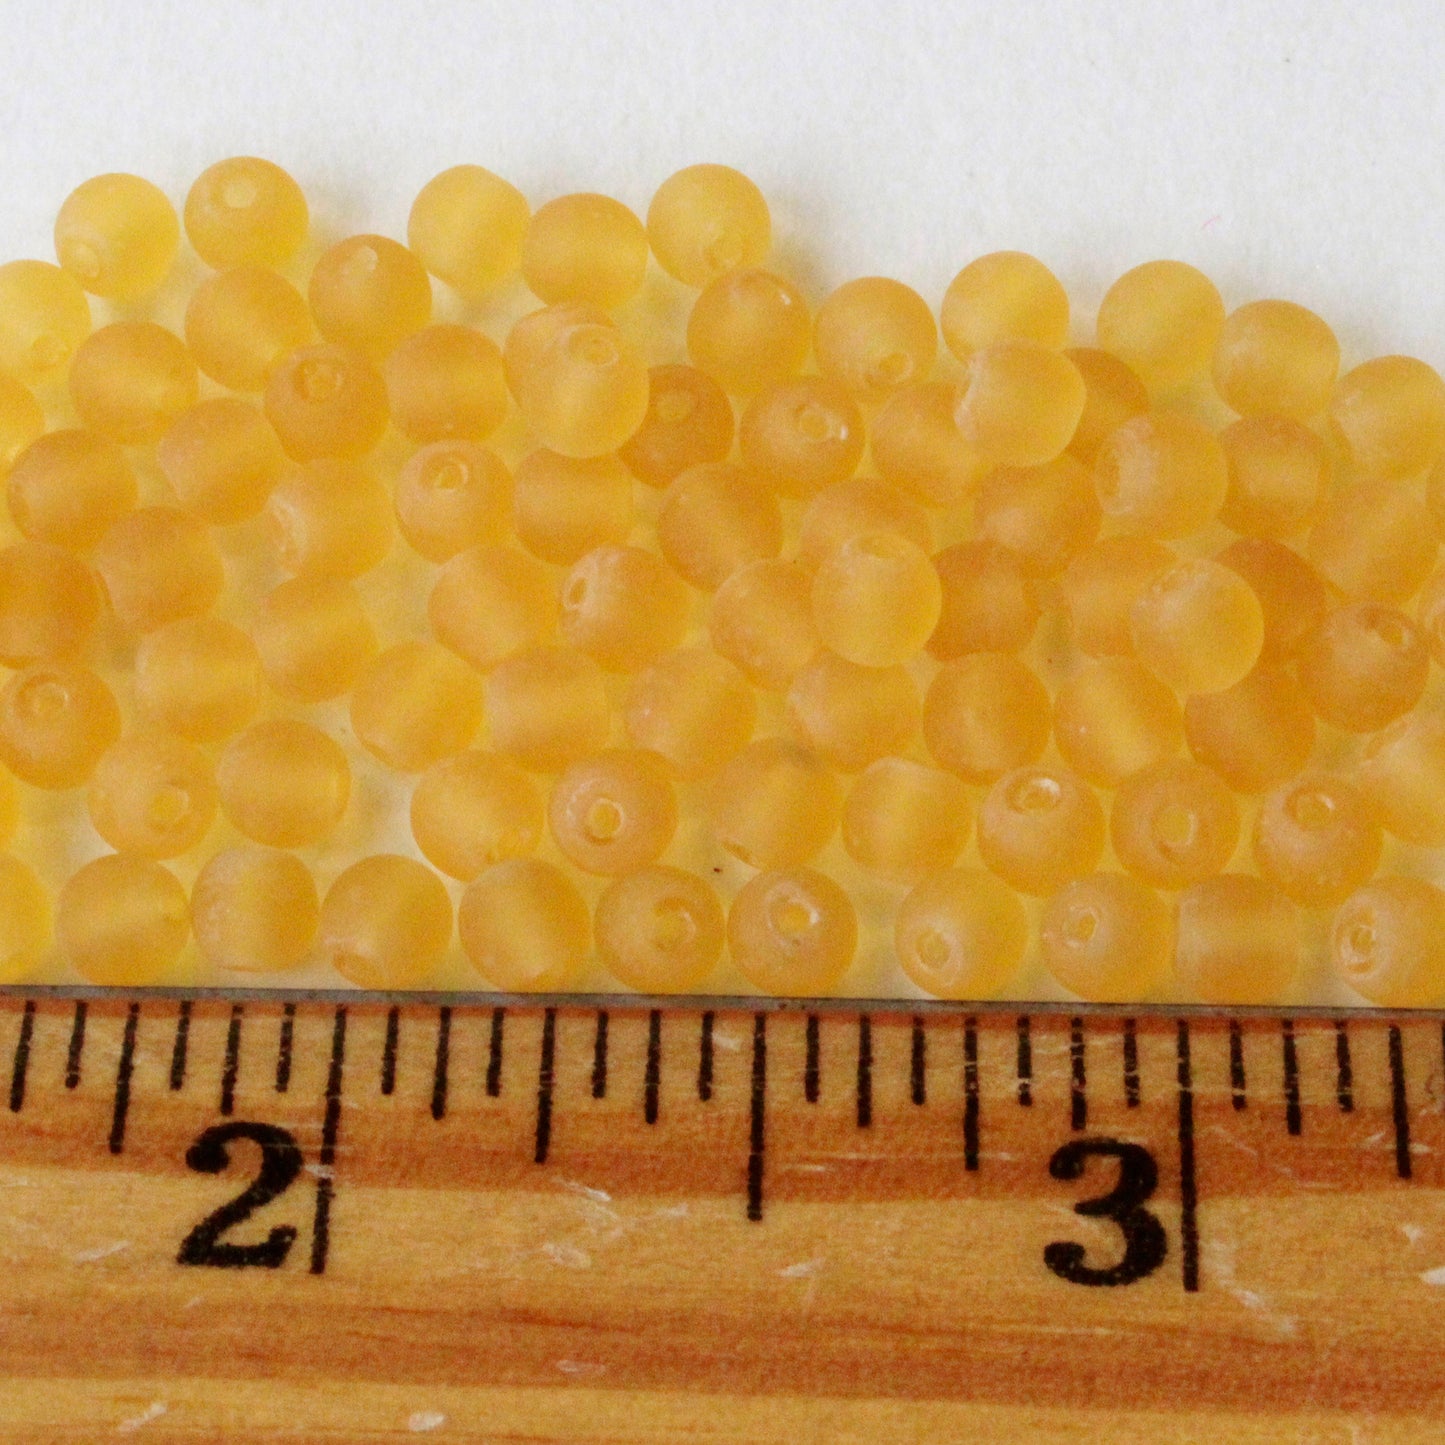 4mm Round Glass Beads - Light Amber Matte - 100 Beads